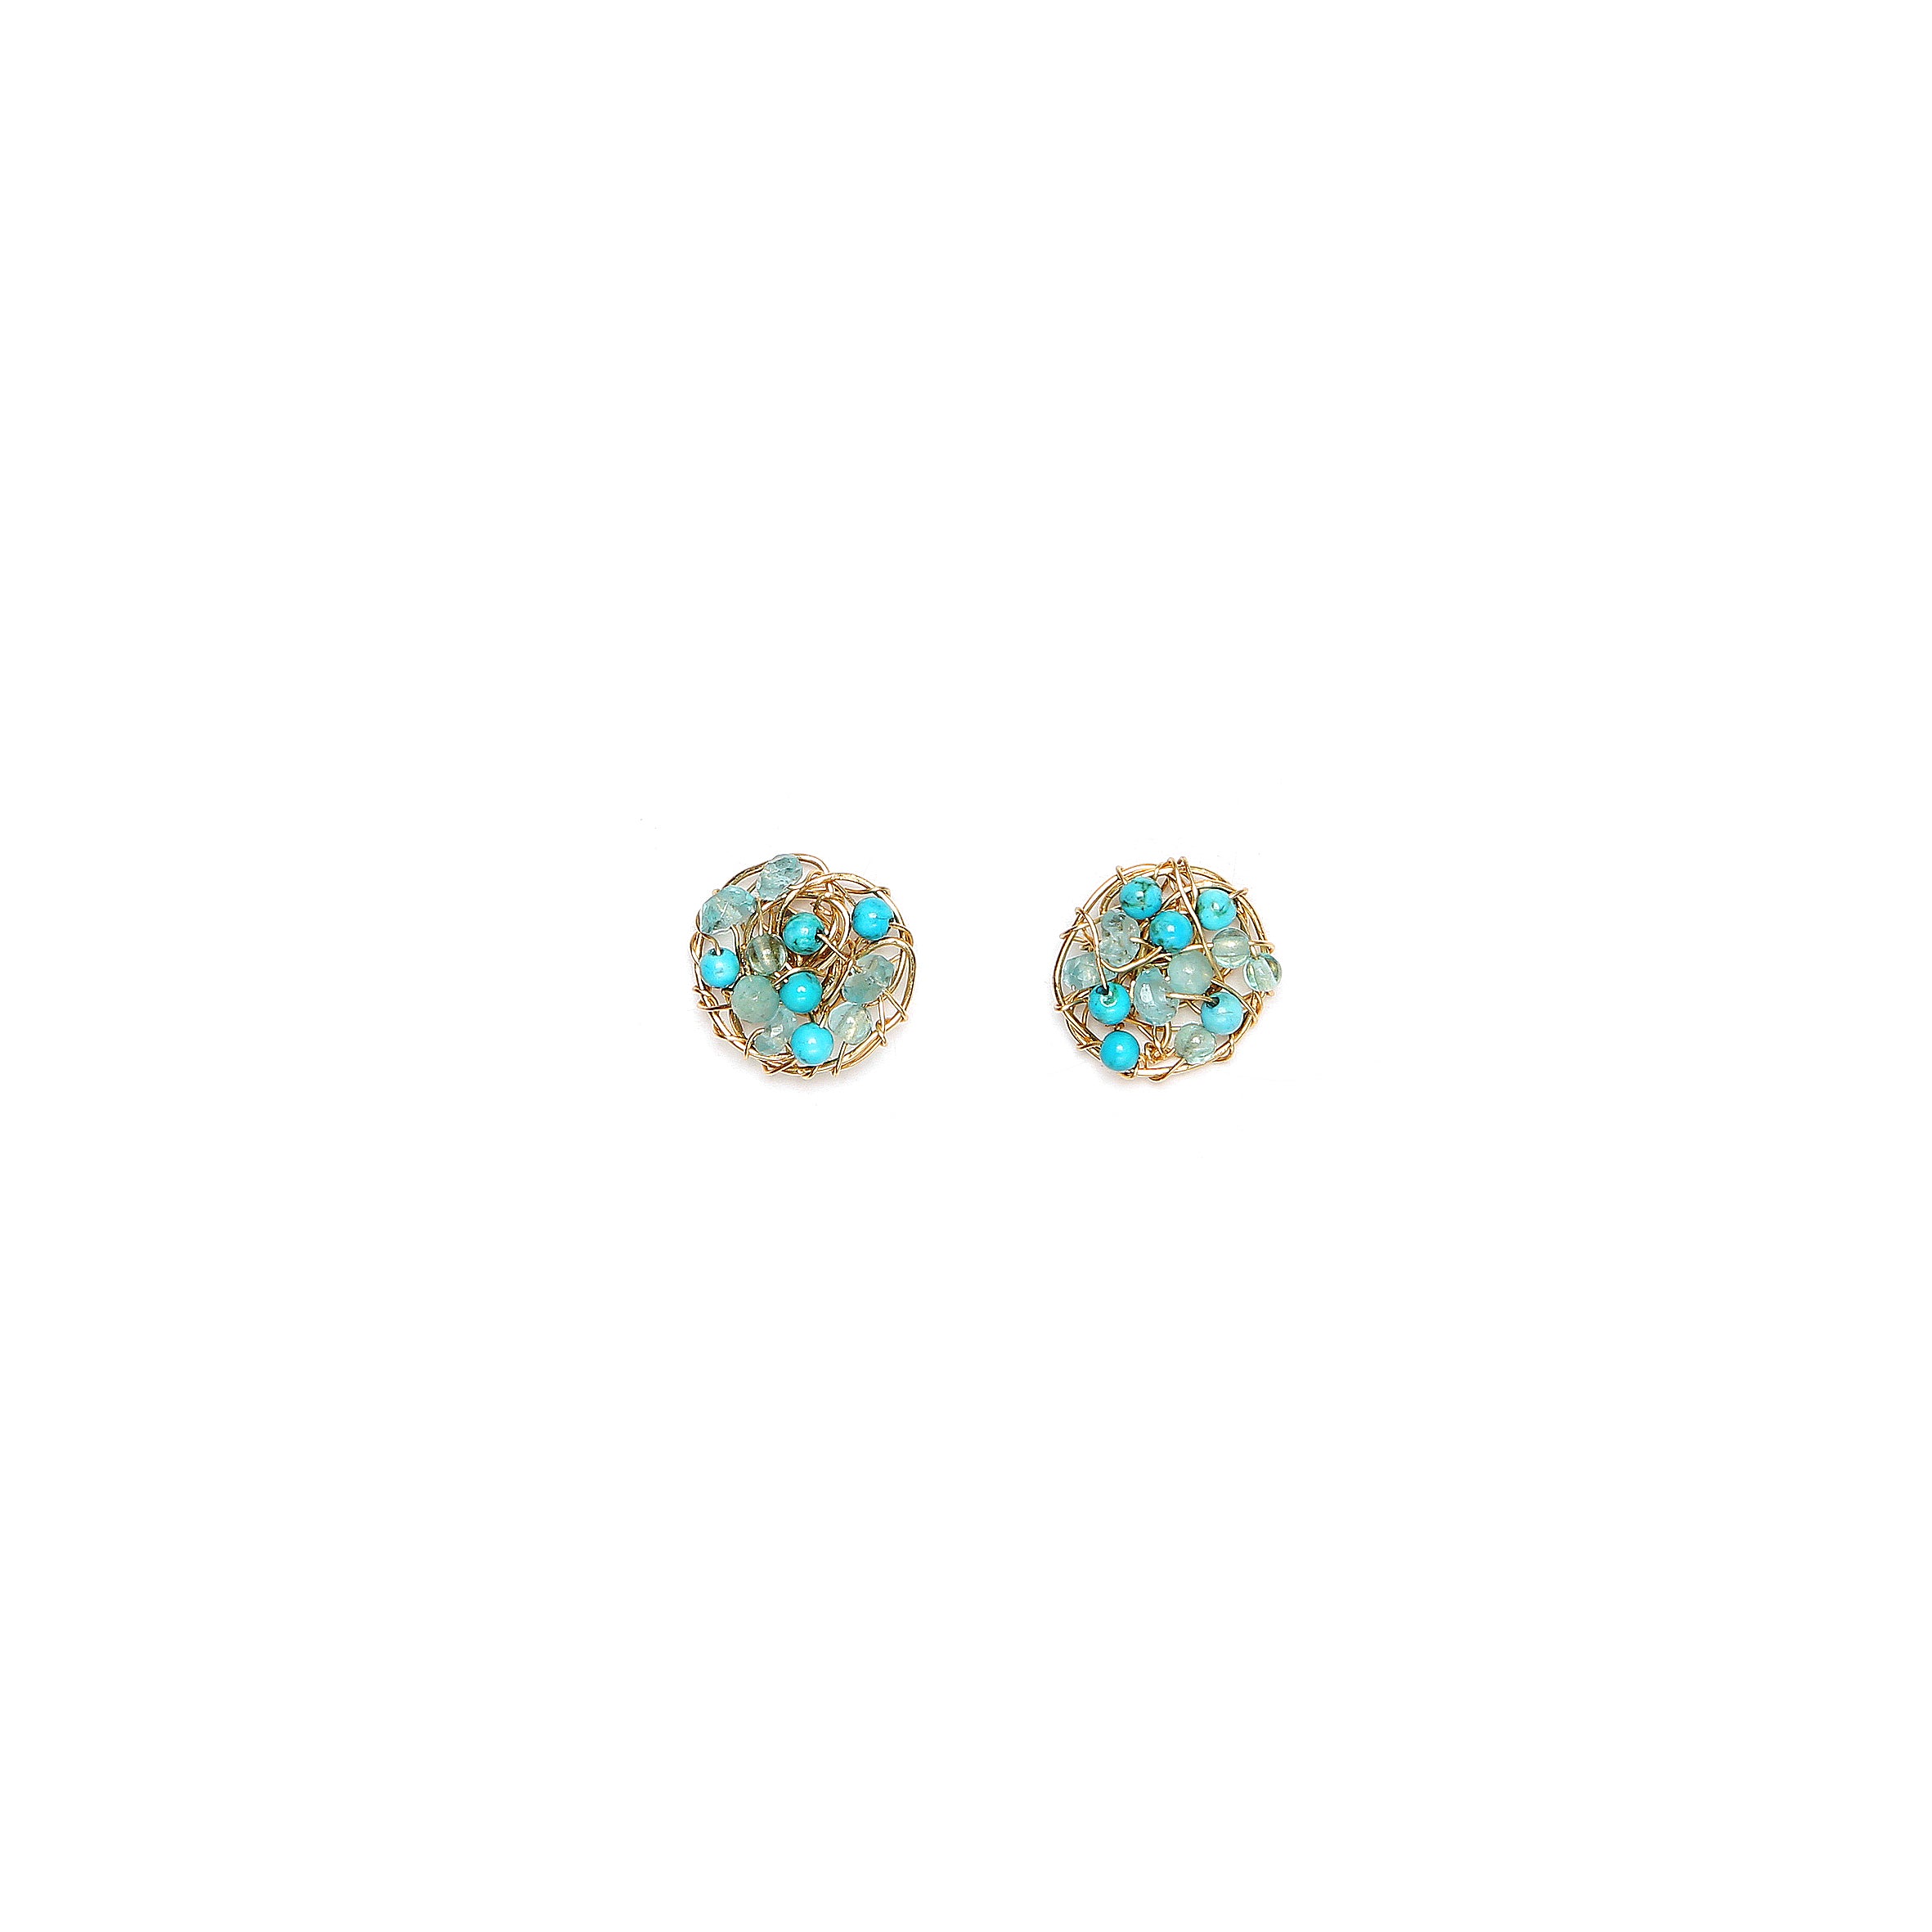 Aura Stud Earrings #1 (15mm) - Turquoise Gems Mix Earrings TARBAY   